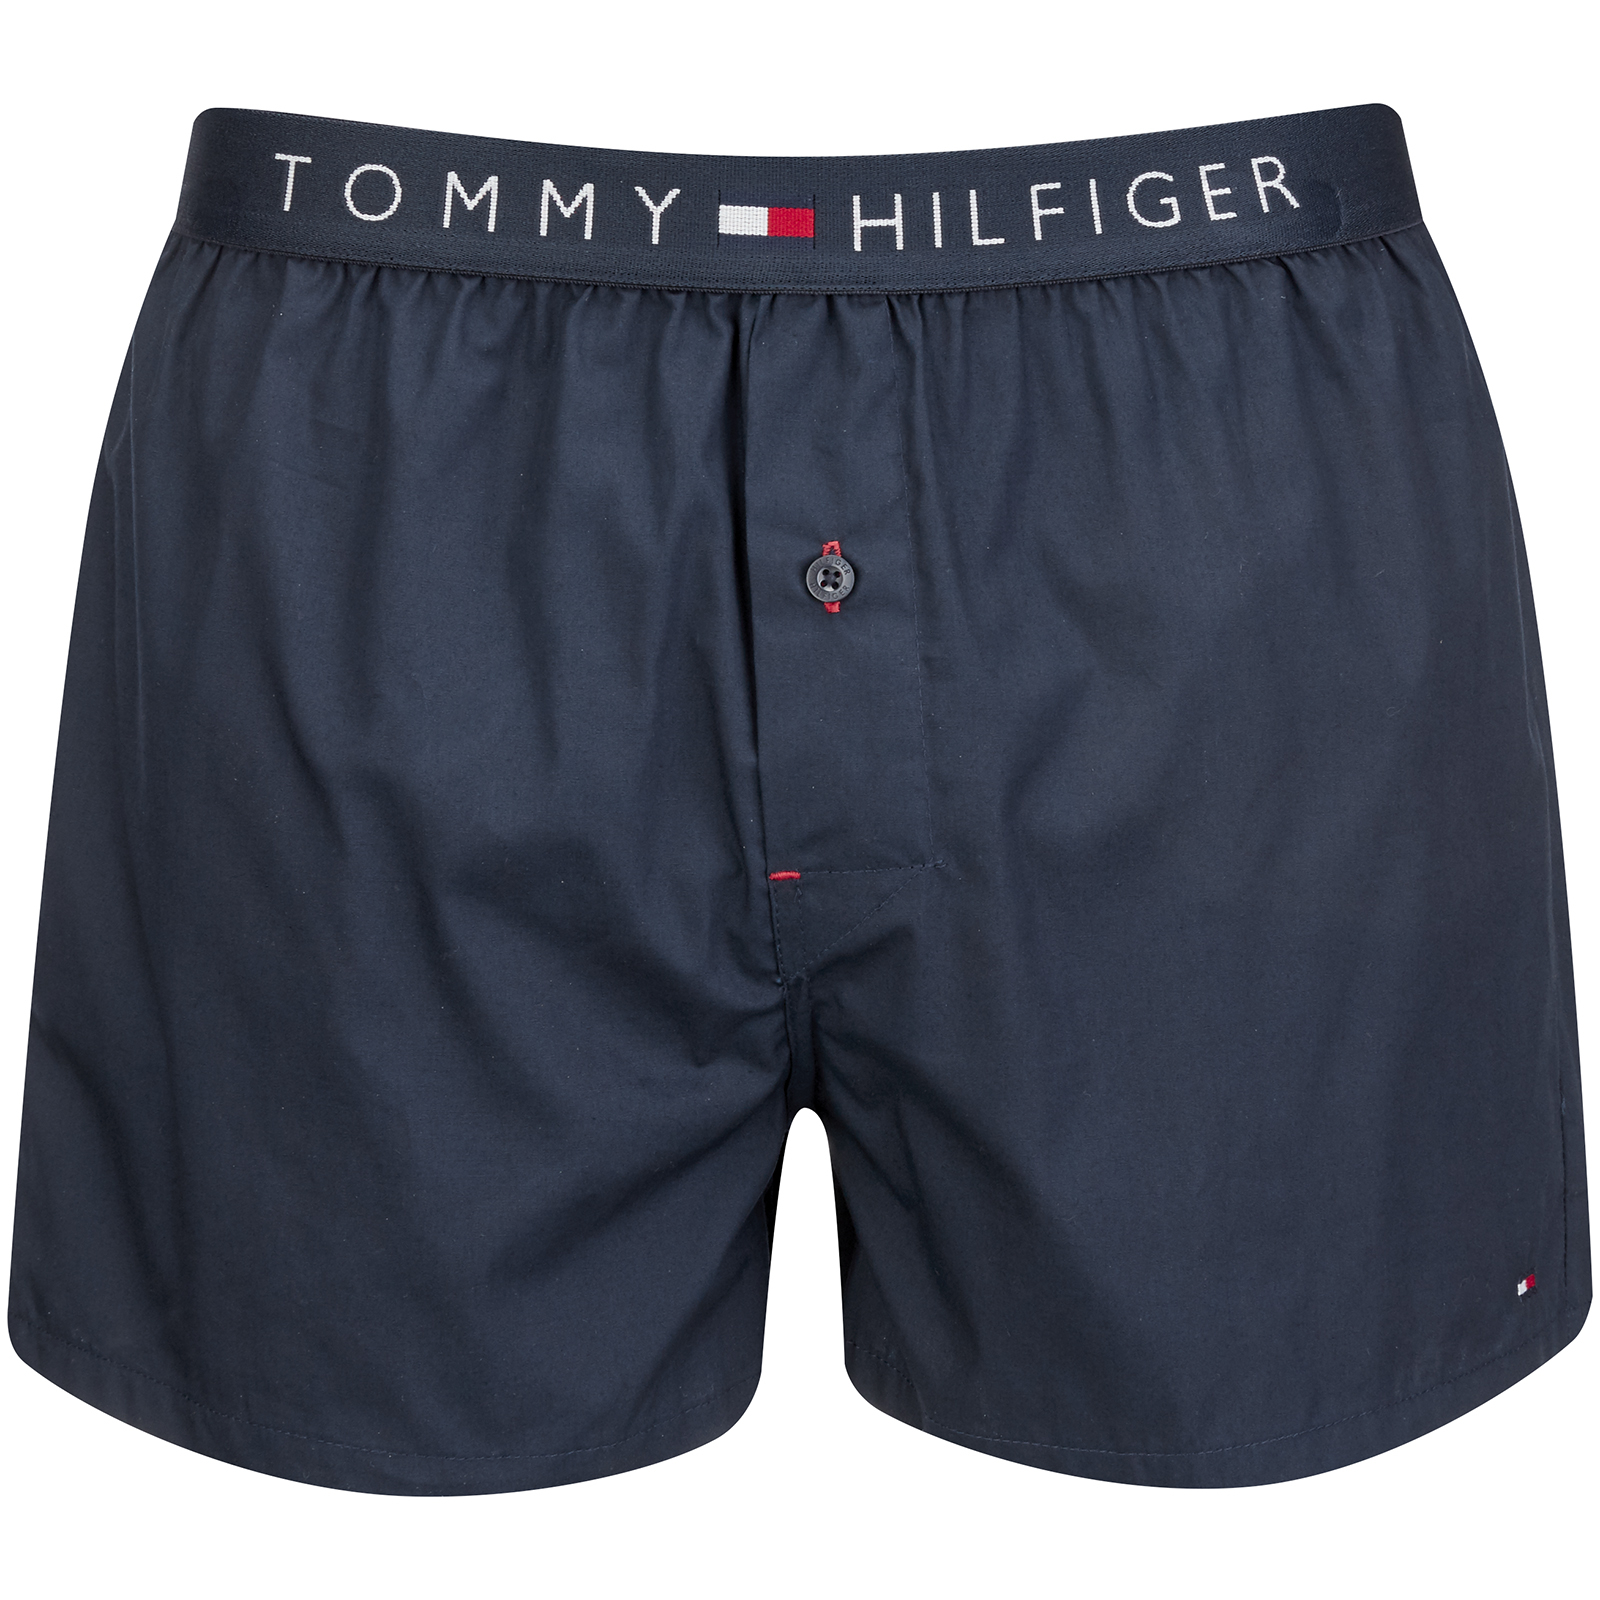 Tommy Hilfiger Men's Smart Cotton Poplin Boxers - Navy Blazer - M